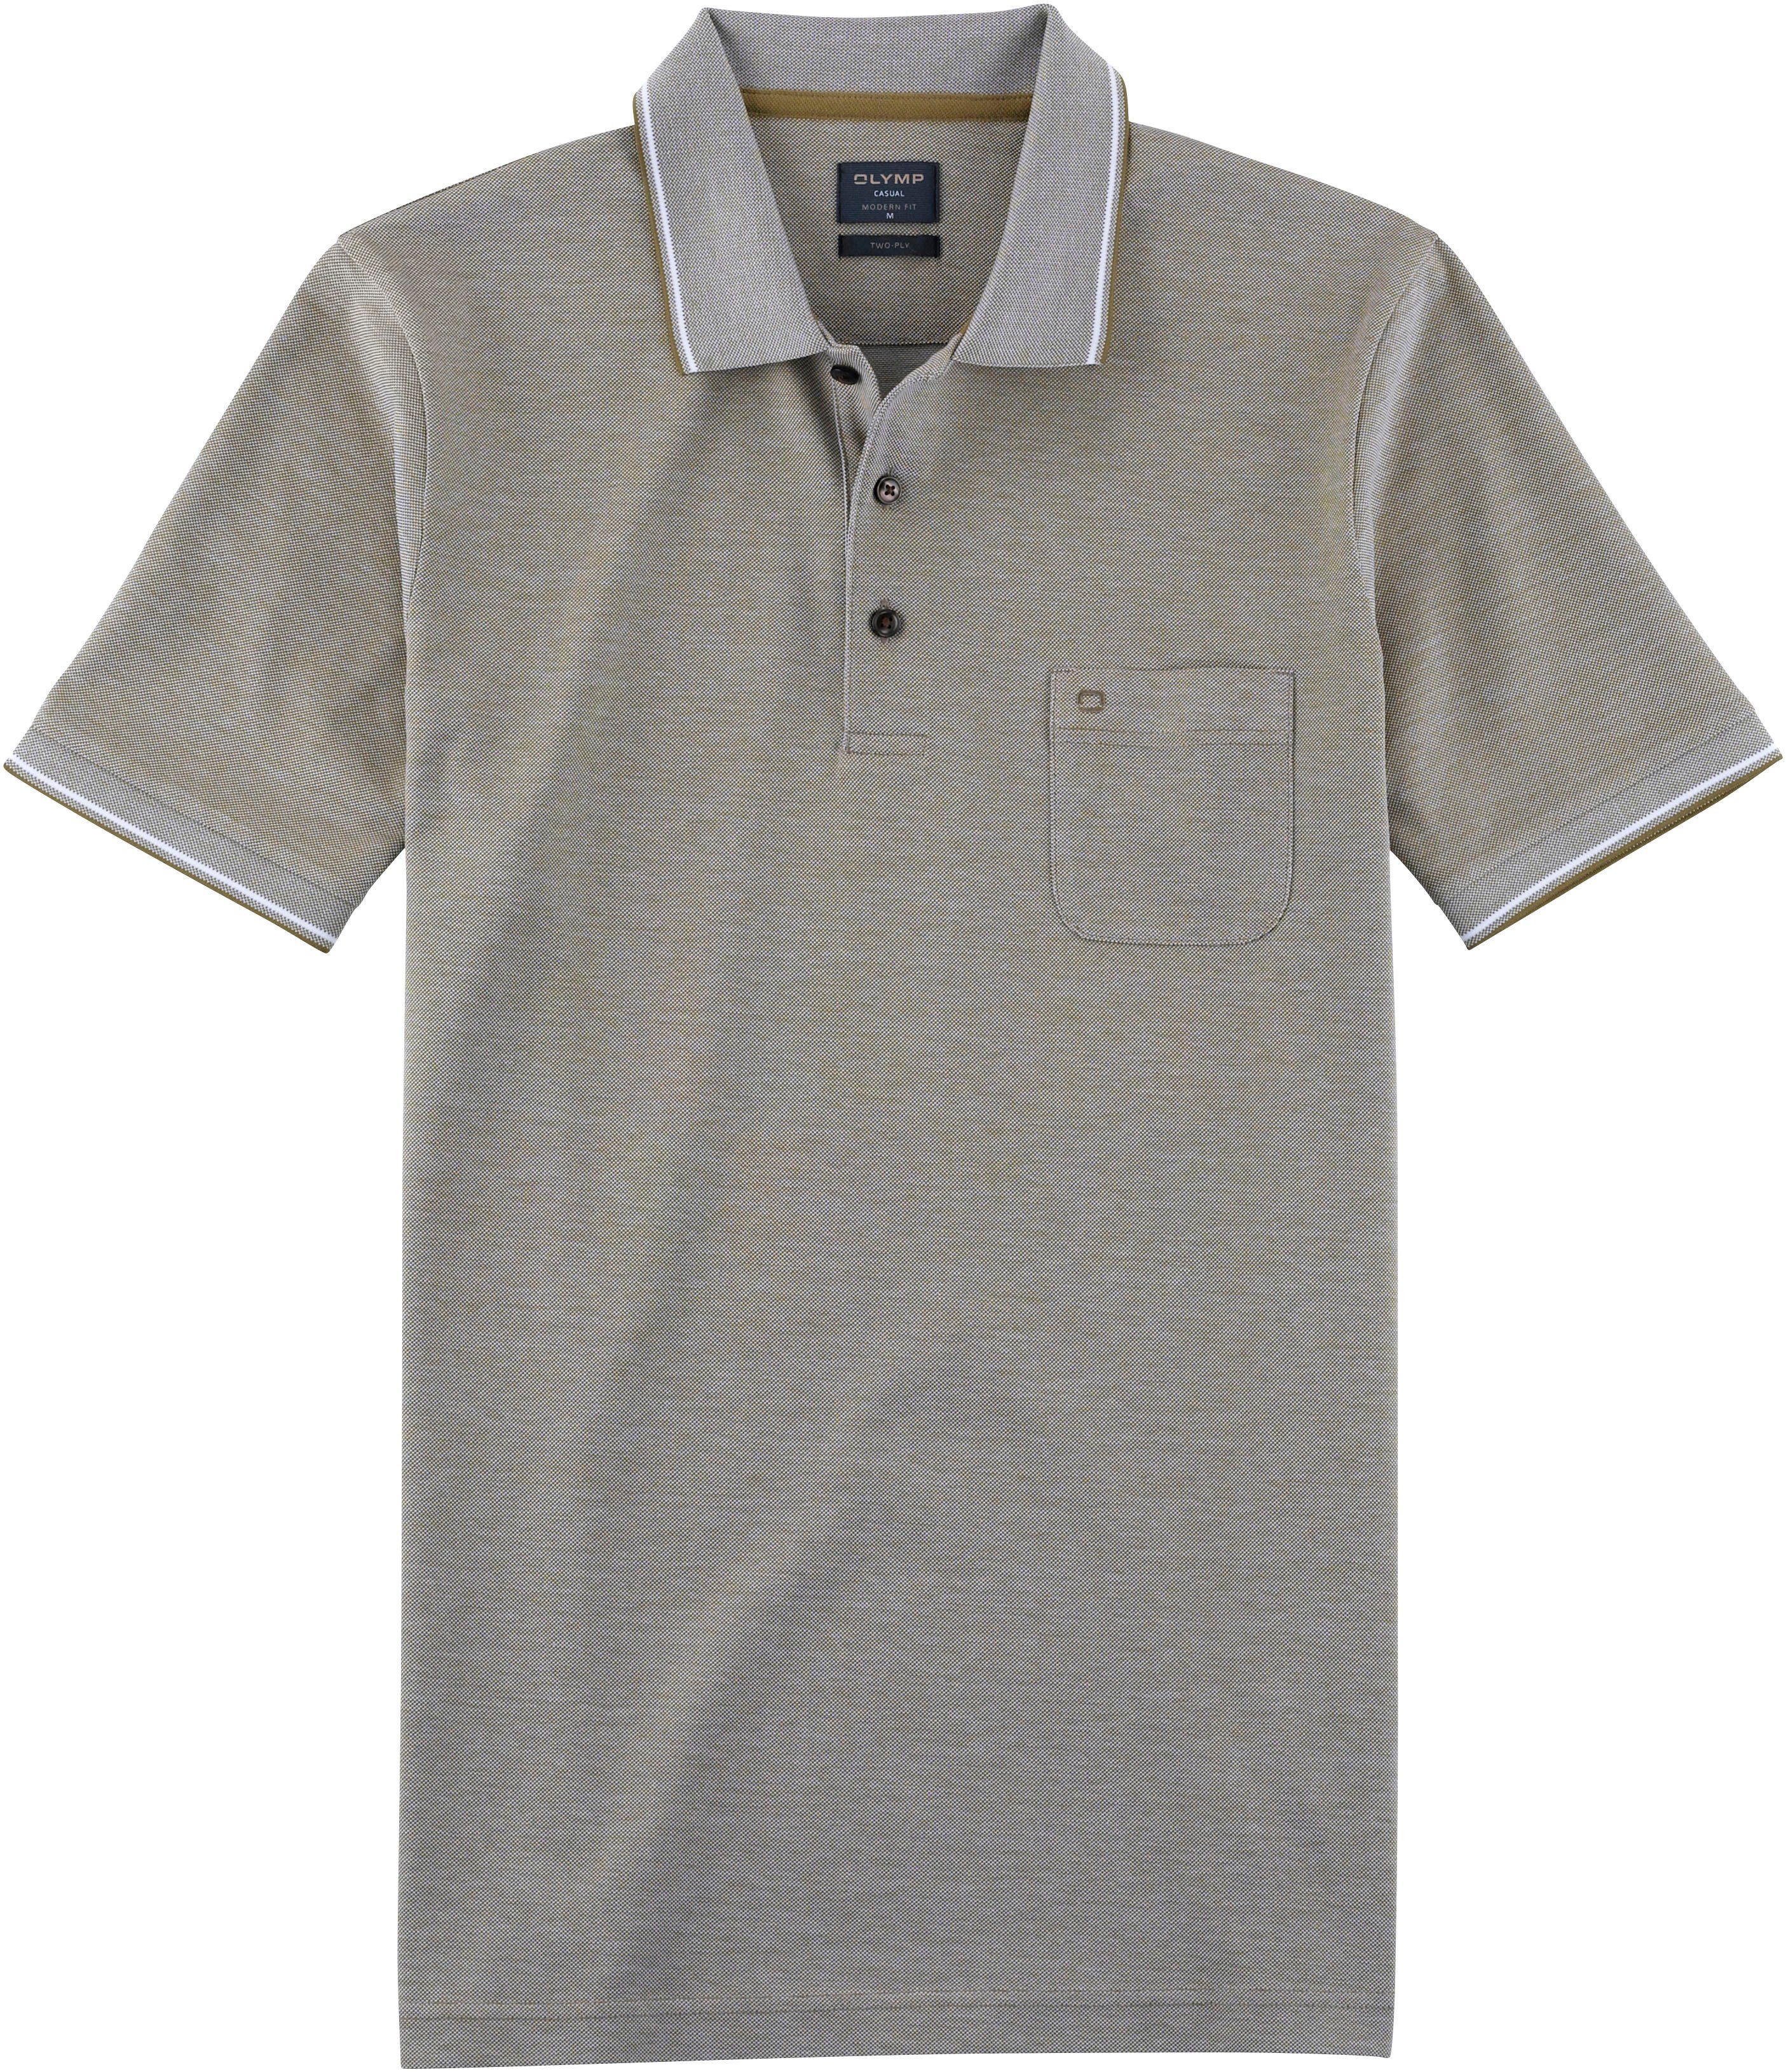 OLYMP Poloshirt Luxor modern fit in hochwertiger Piqué-Qualität khaki